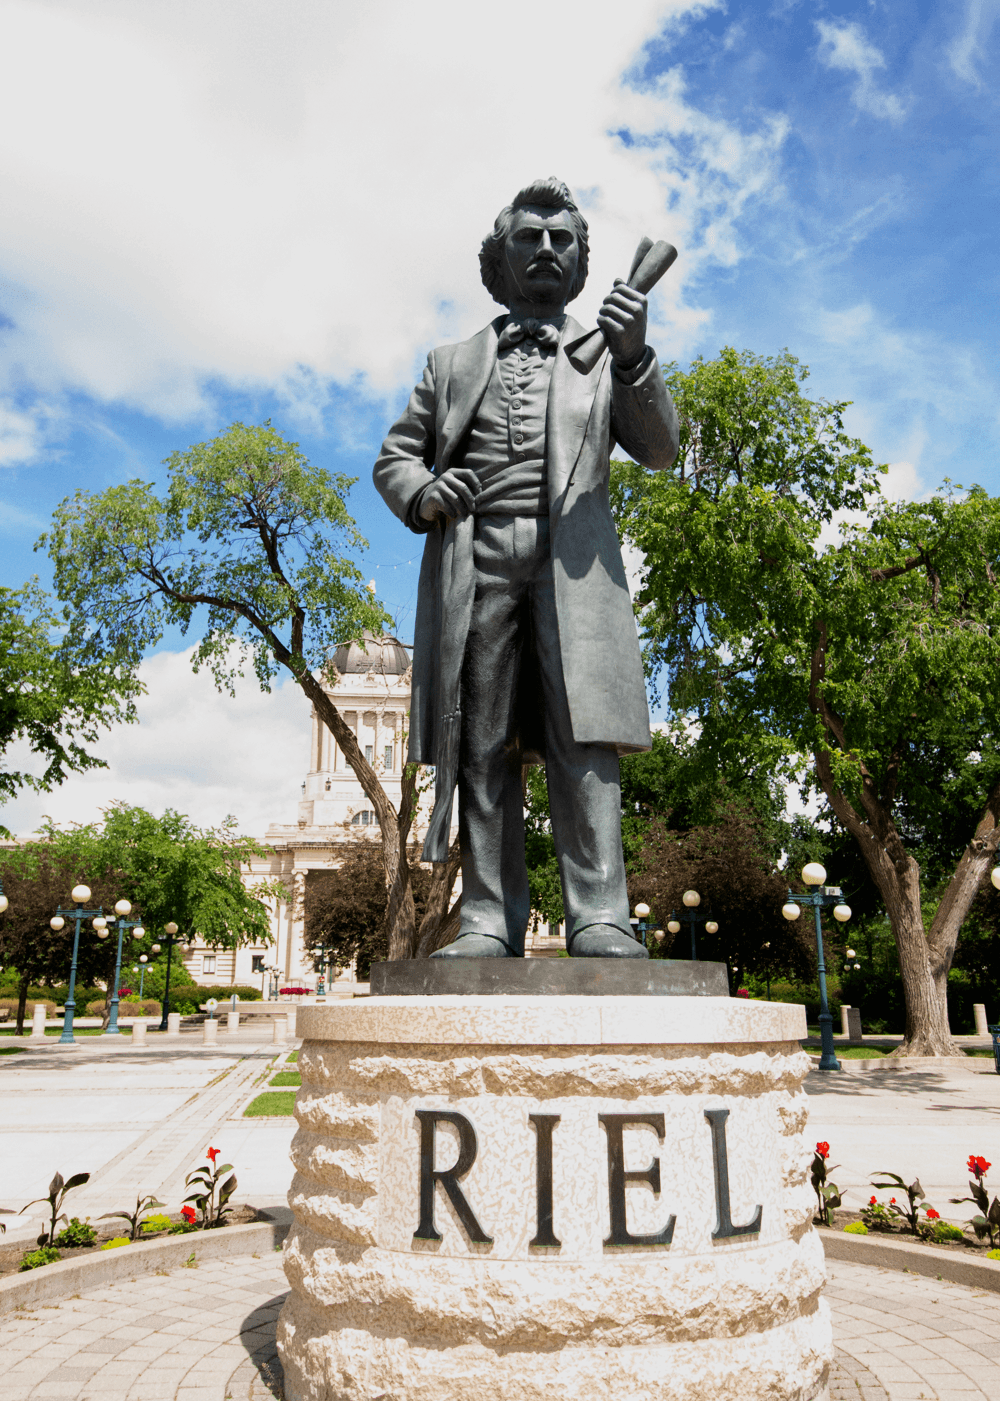 Louis Riel - Father of Manitoba